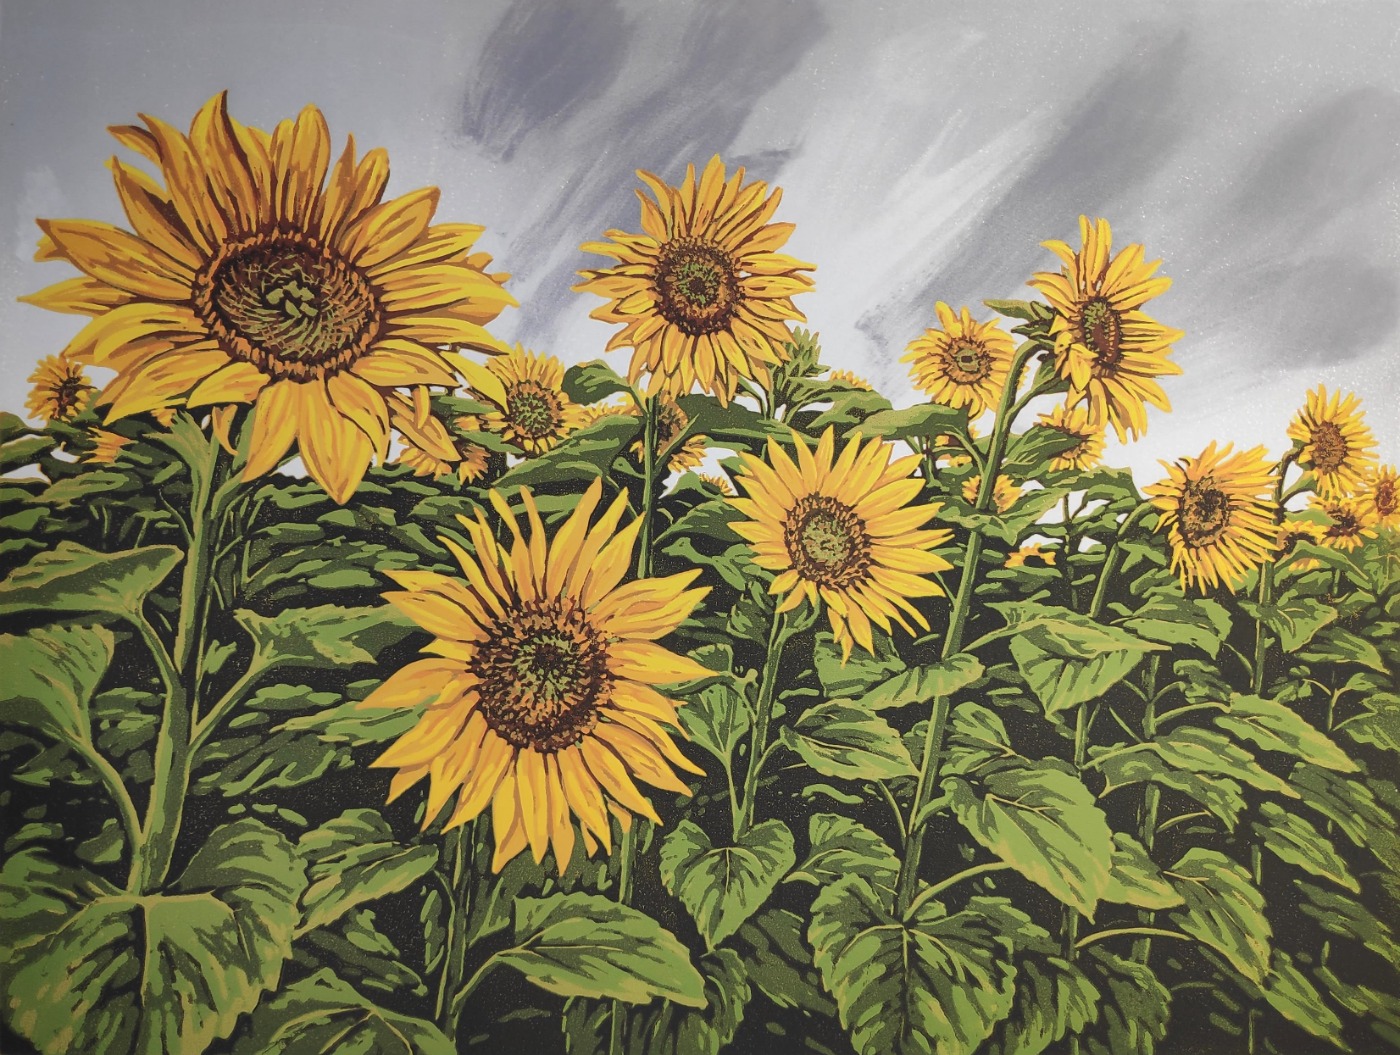 Sunflowers, Rain Showers by Alexandra Buckle